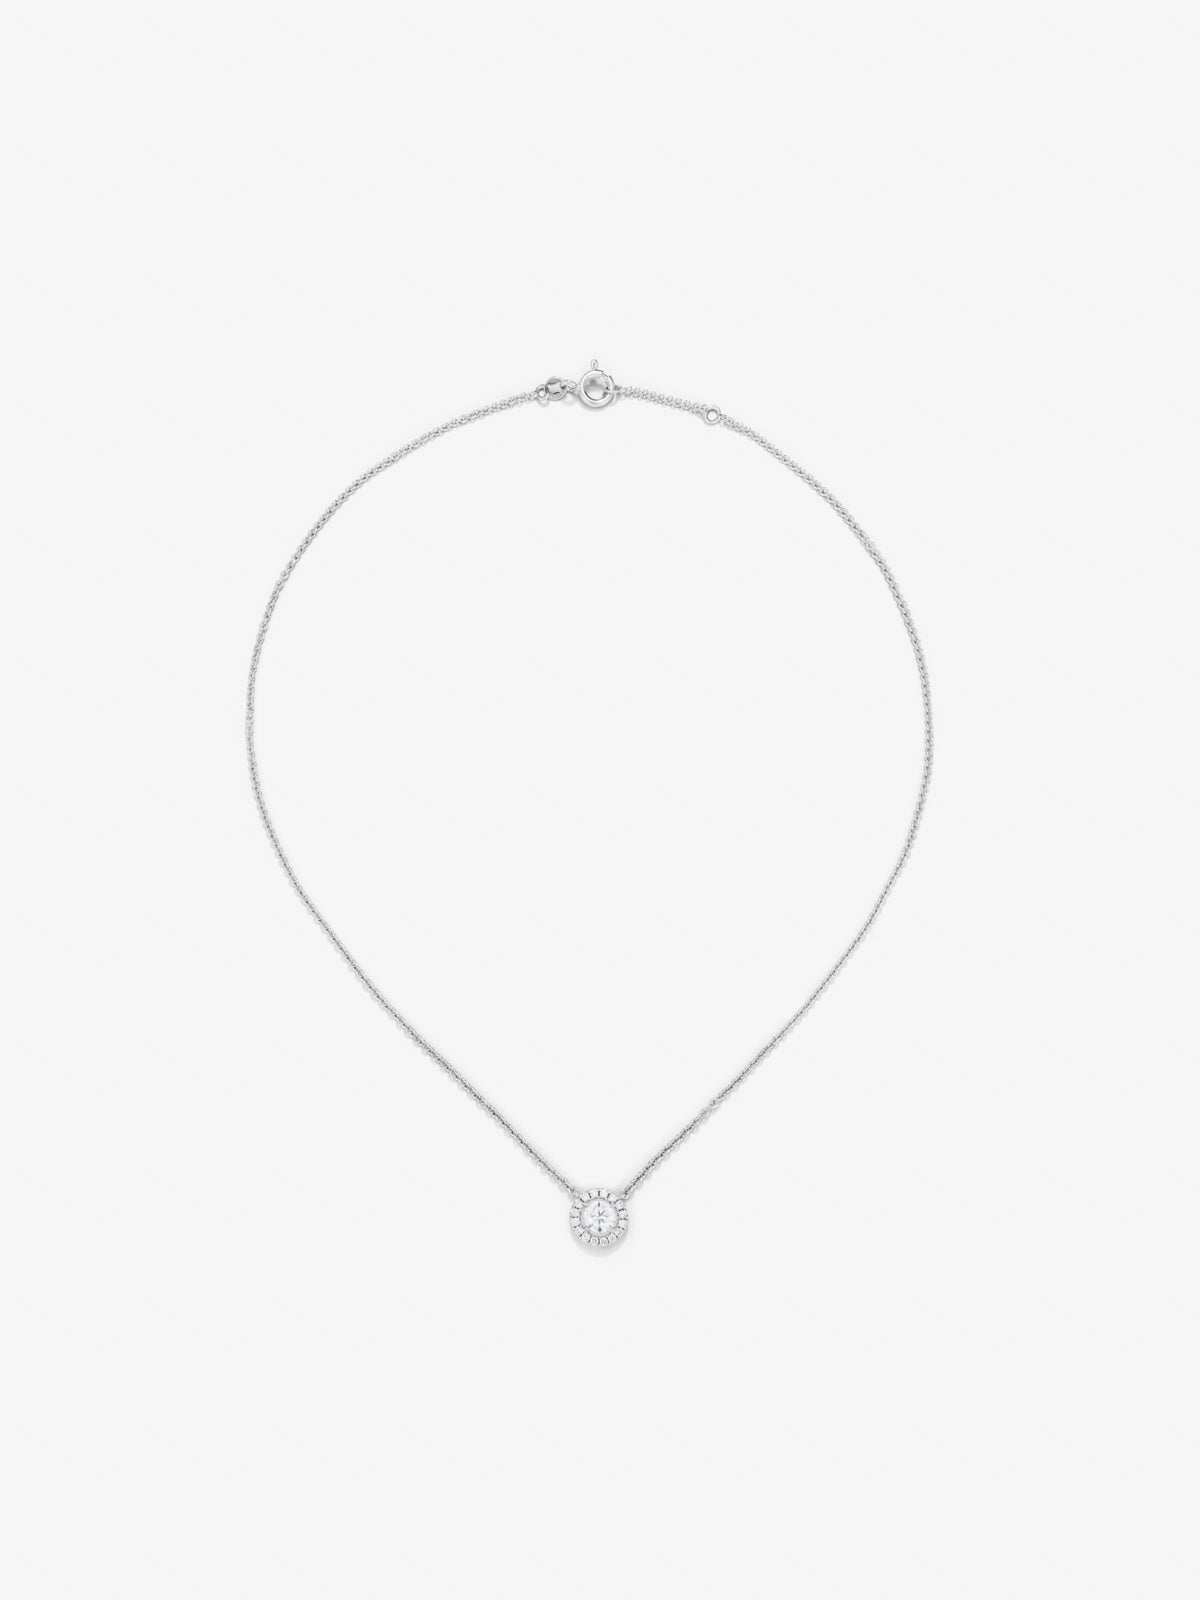 18K white gold chain pendant with solitary diamond and diamond urla